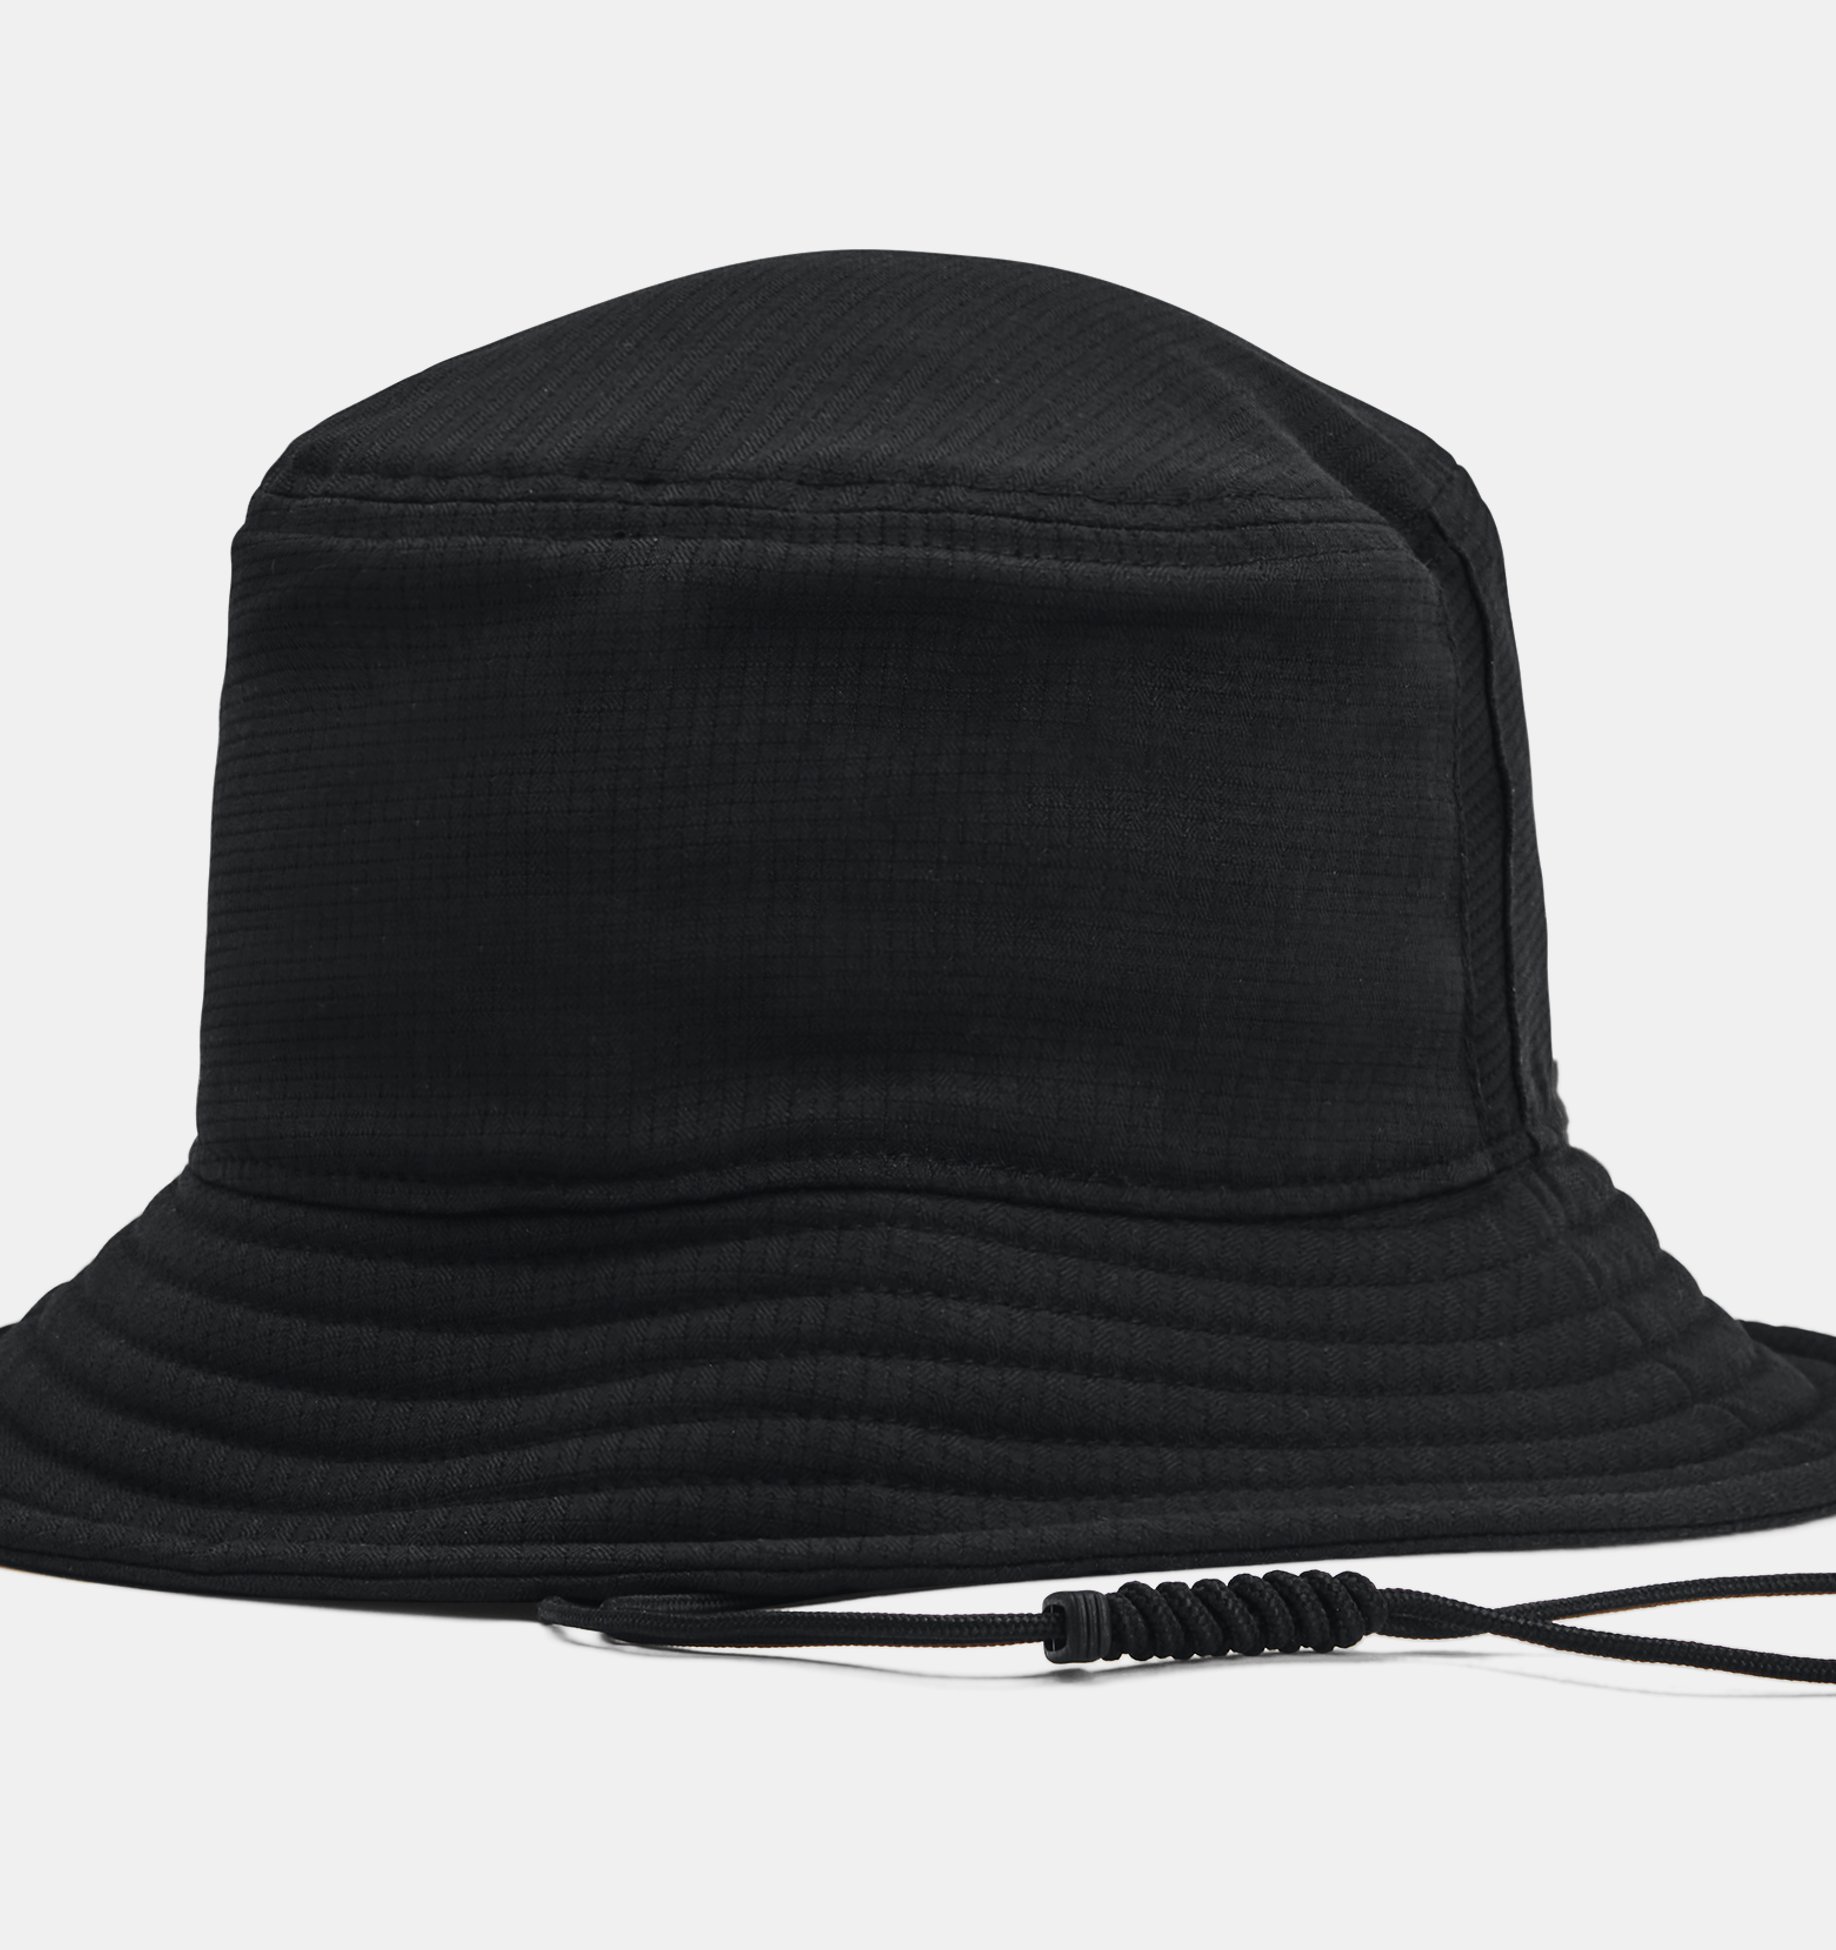 Under Armour Bucket Hats For Men